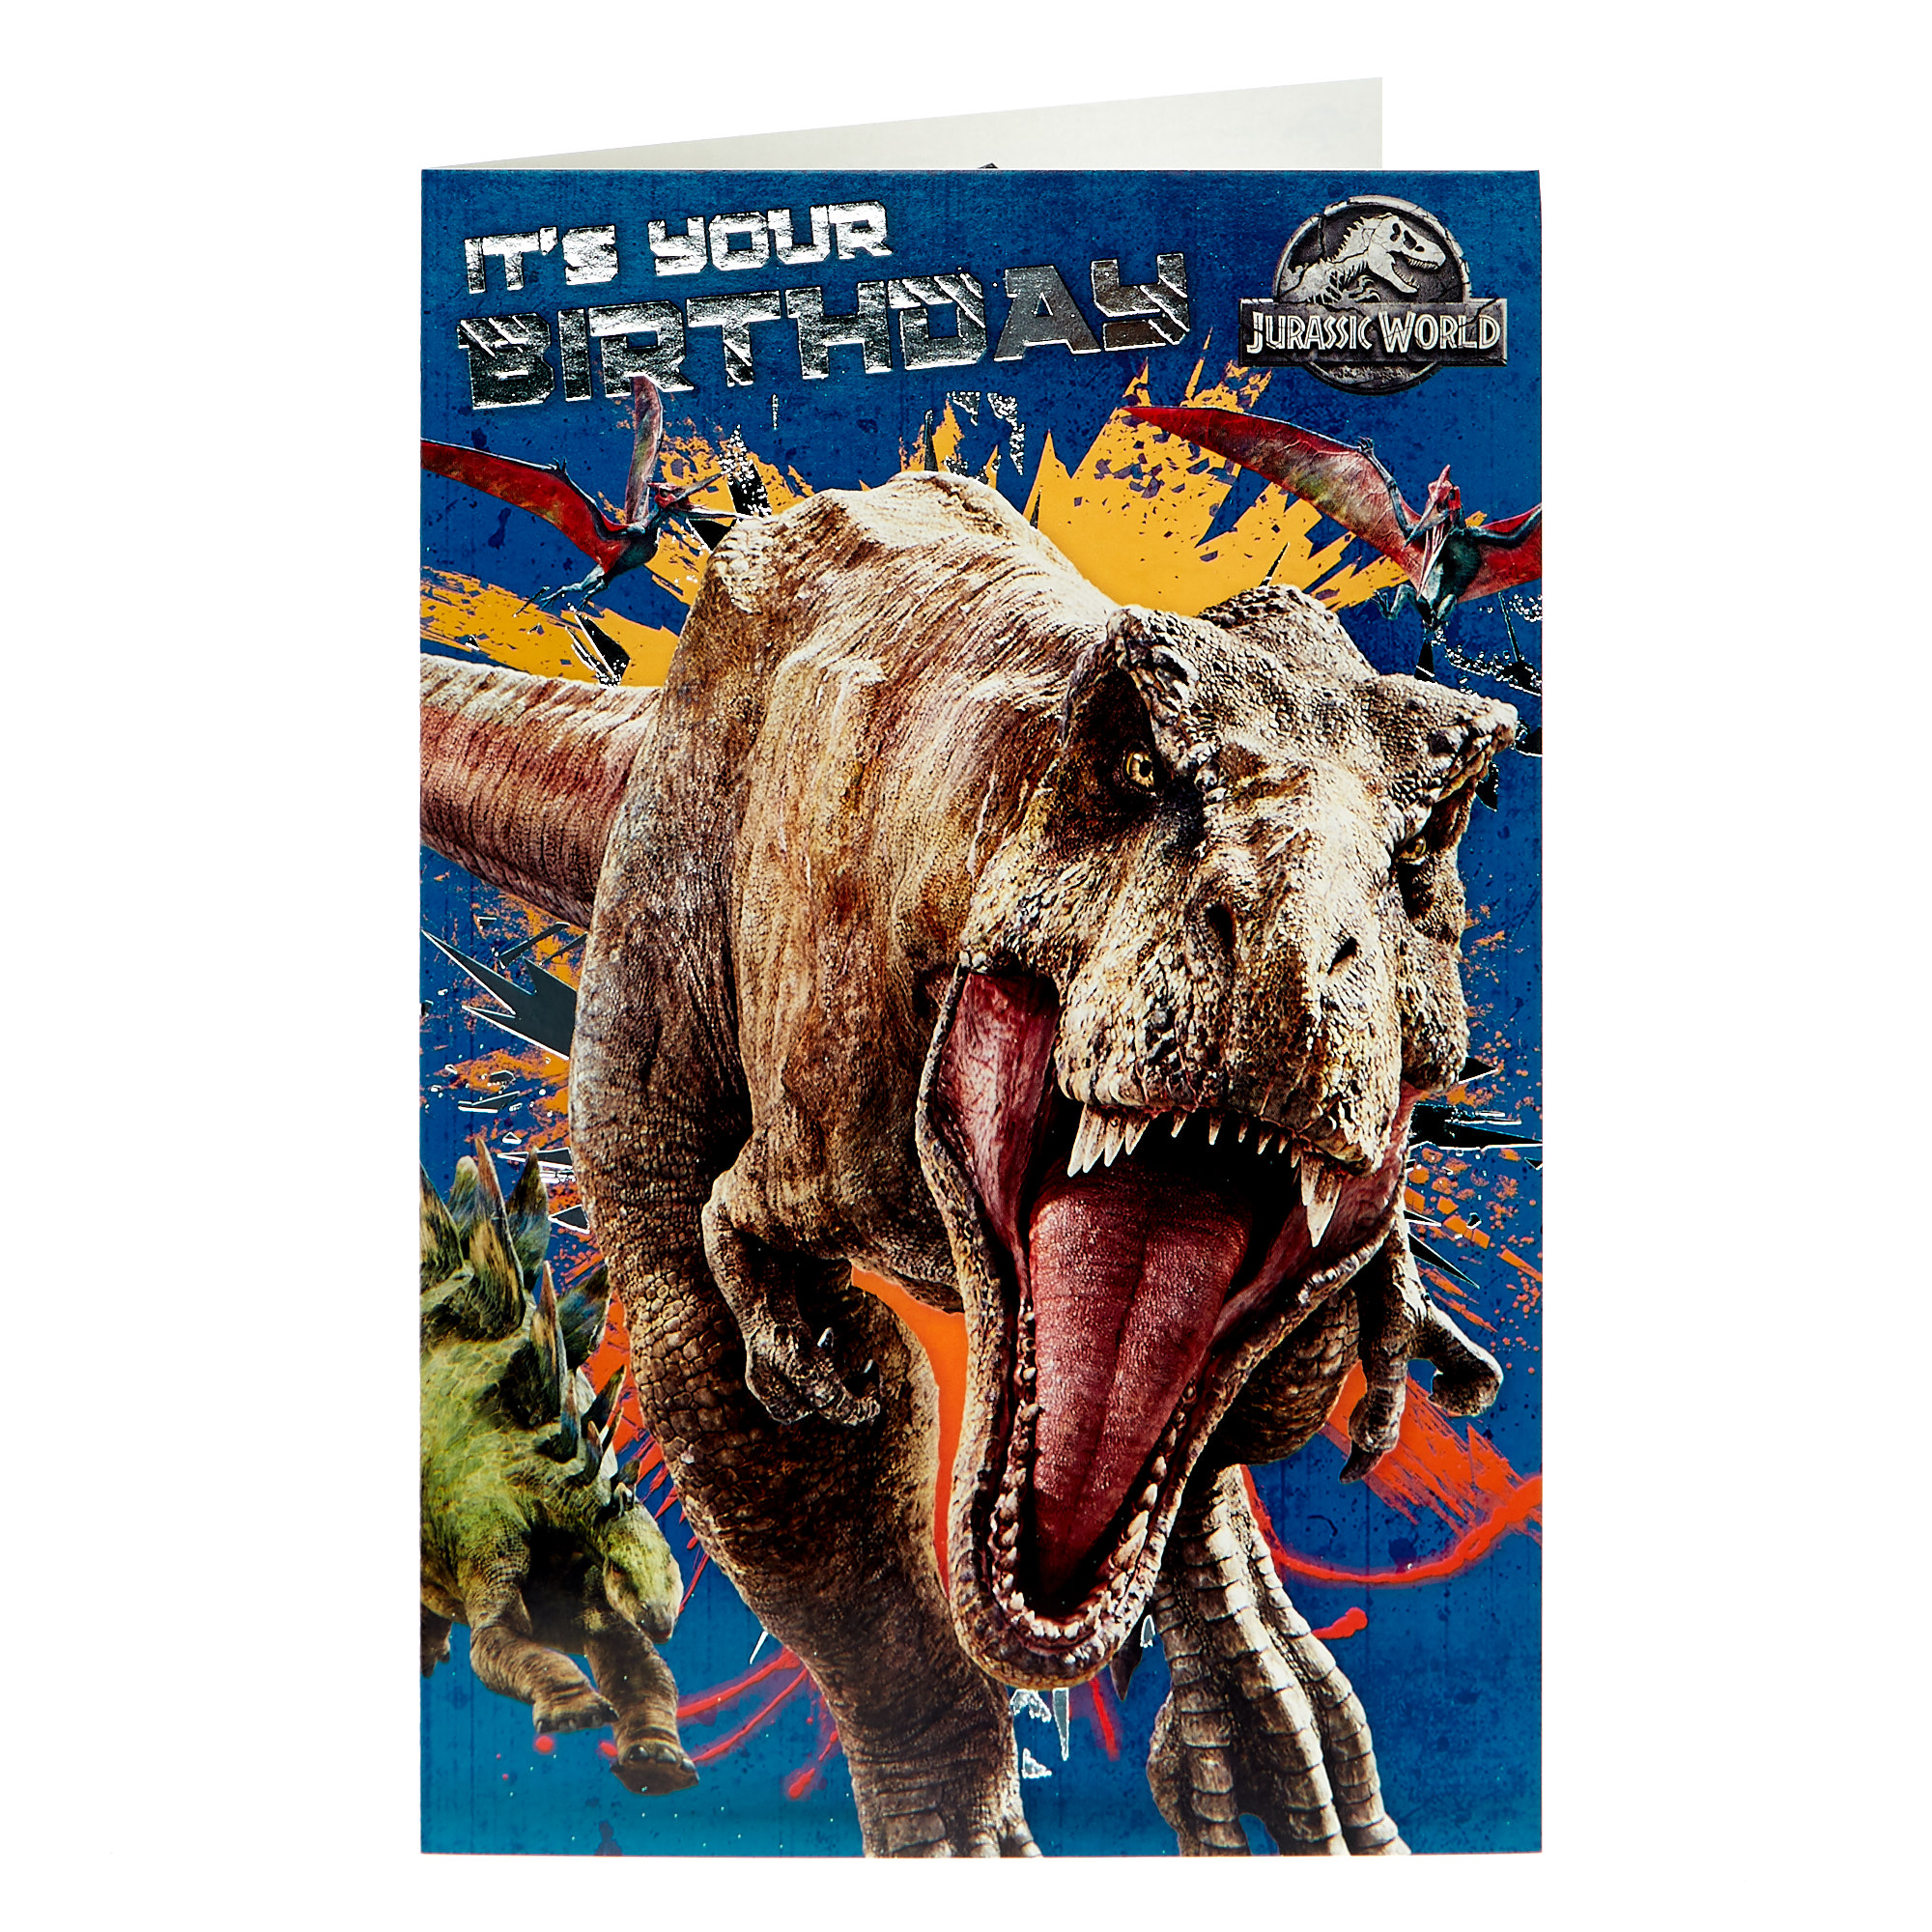 Buy Jurassic World Birthday Card - T-Rex for GBP 0.99 | Card Factory UK